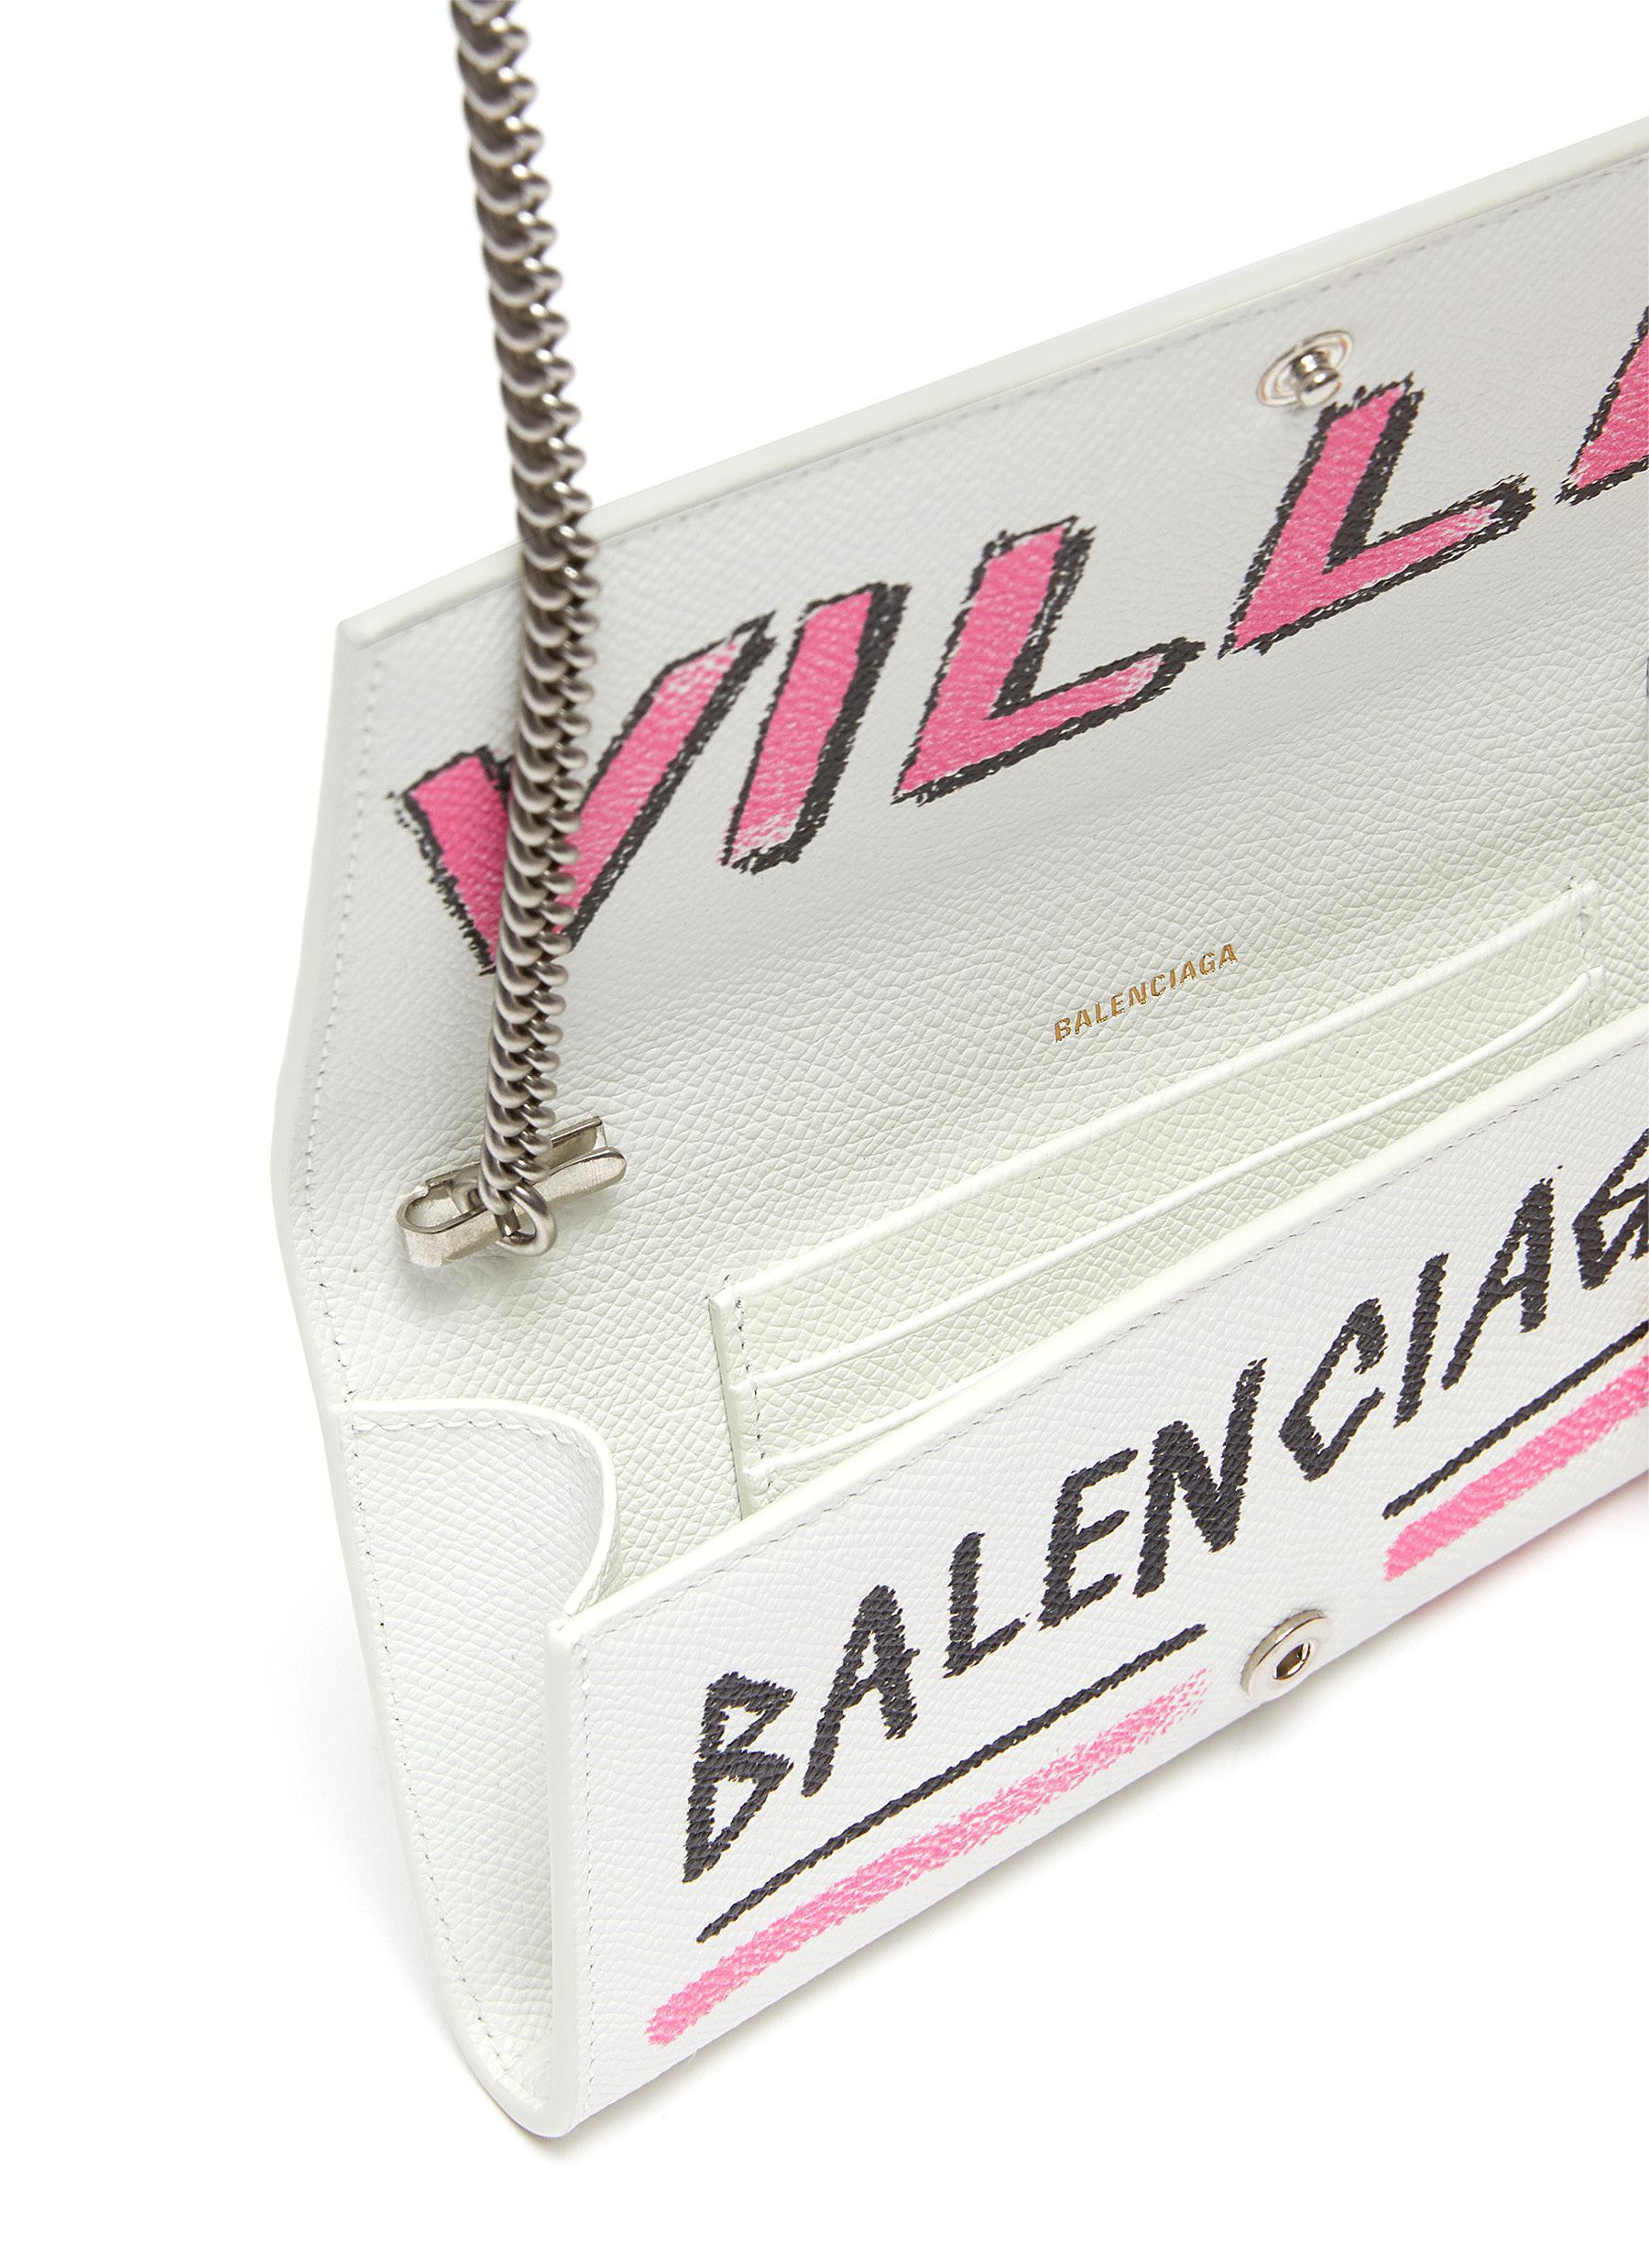 Balenciaga 'ville' Graffiti Print Leather Chain Phone Wallet in White | Lyst